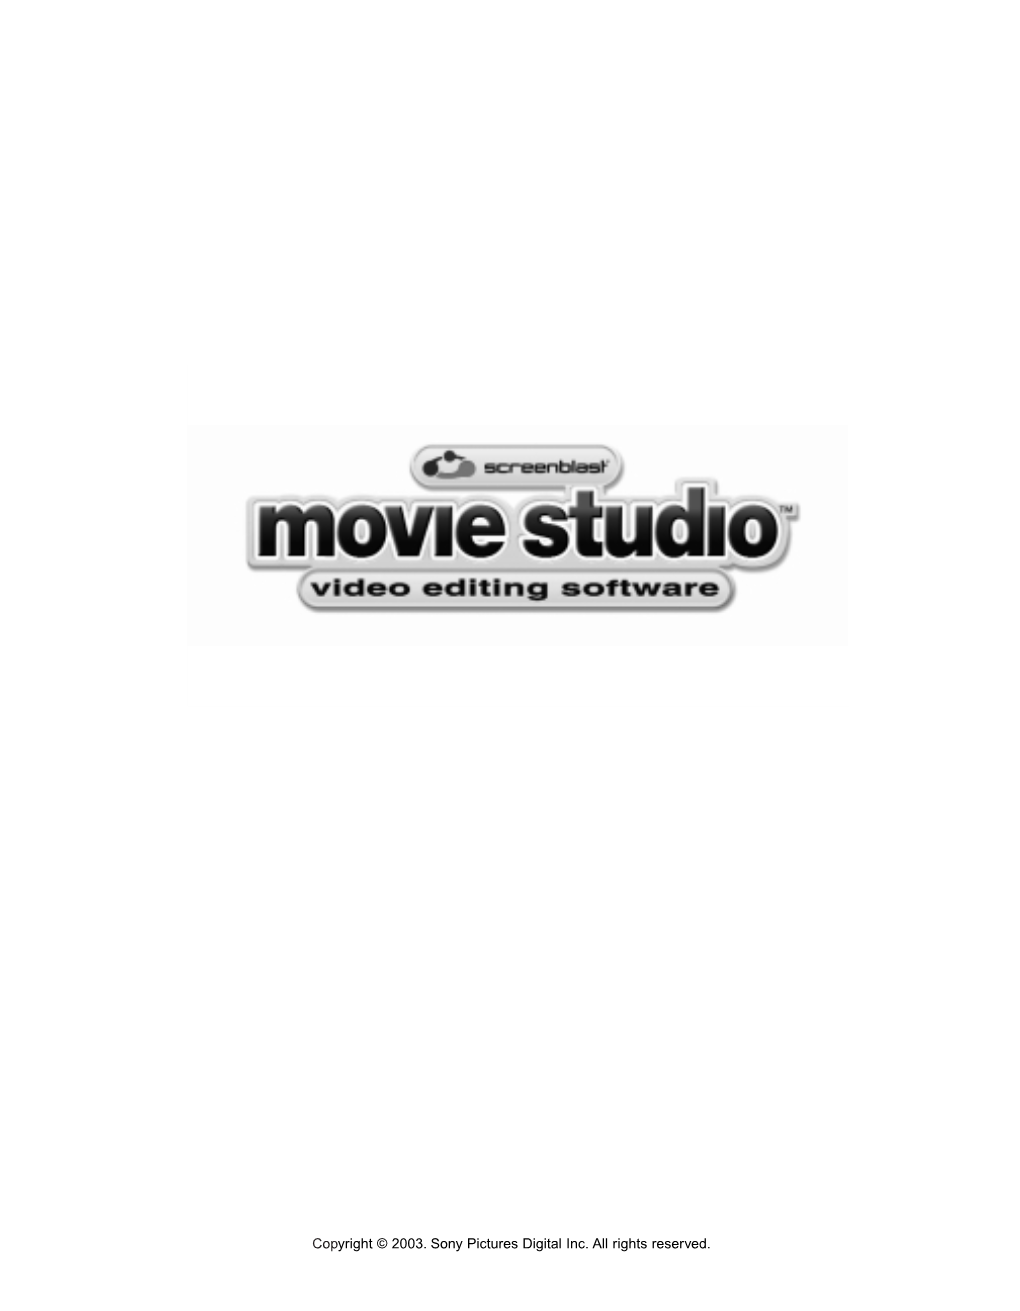 Screenblast Movie Studio.Pdf